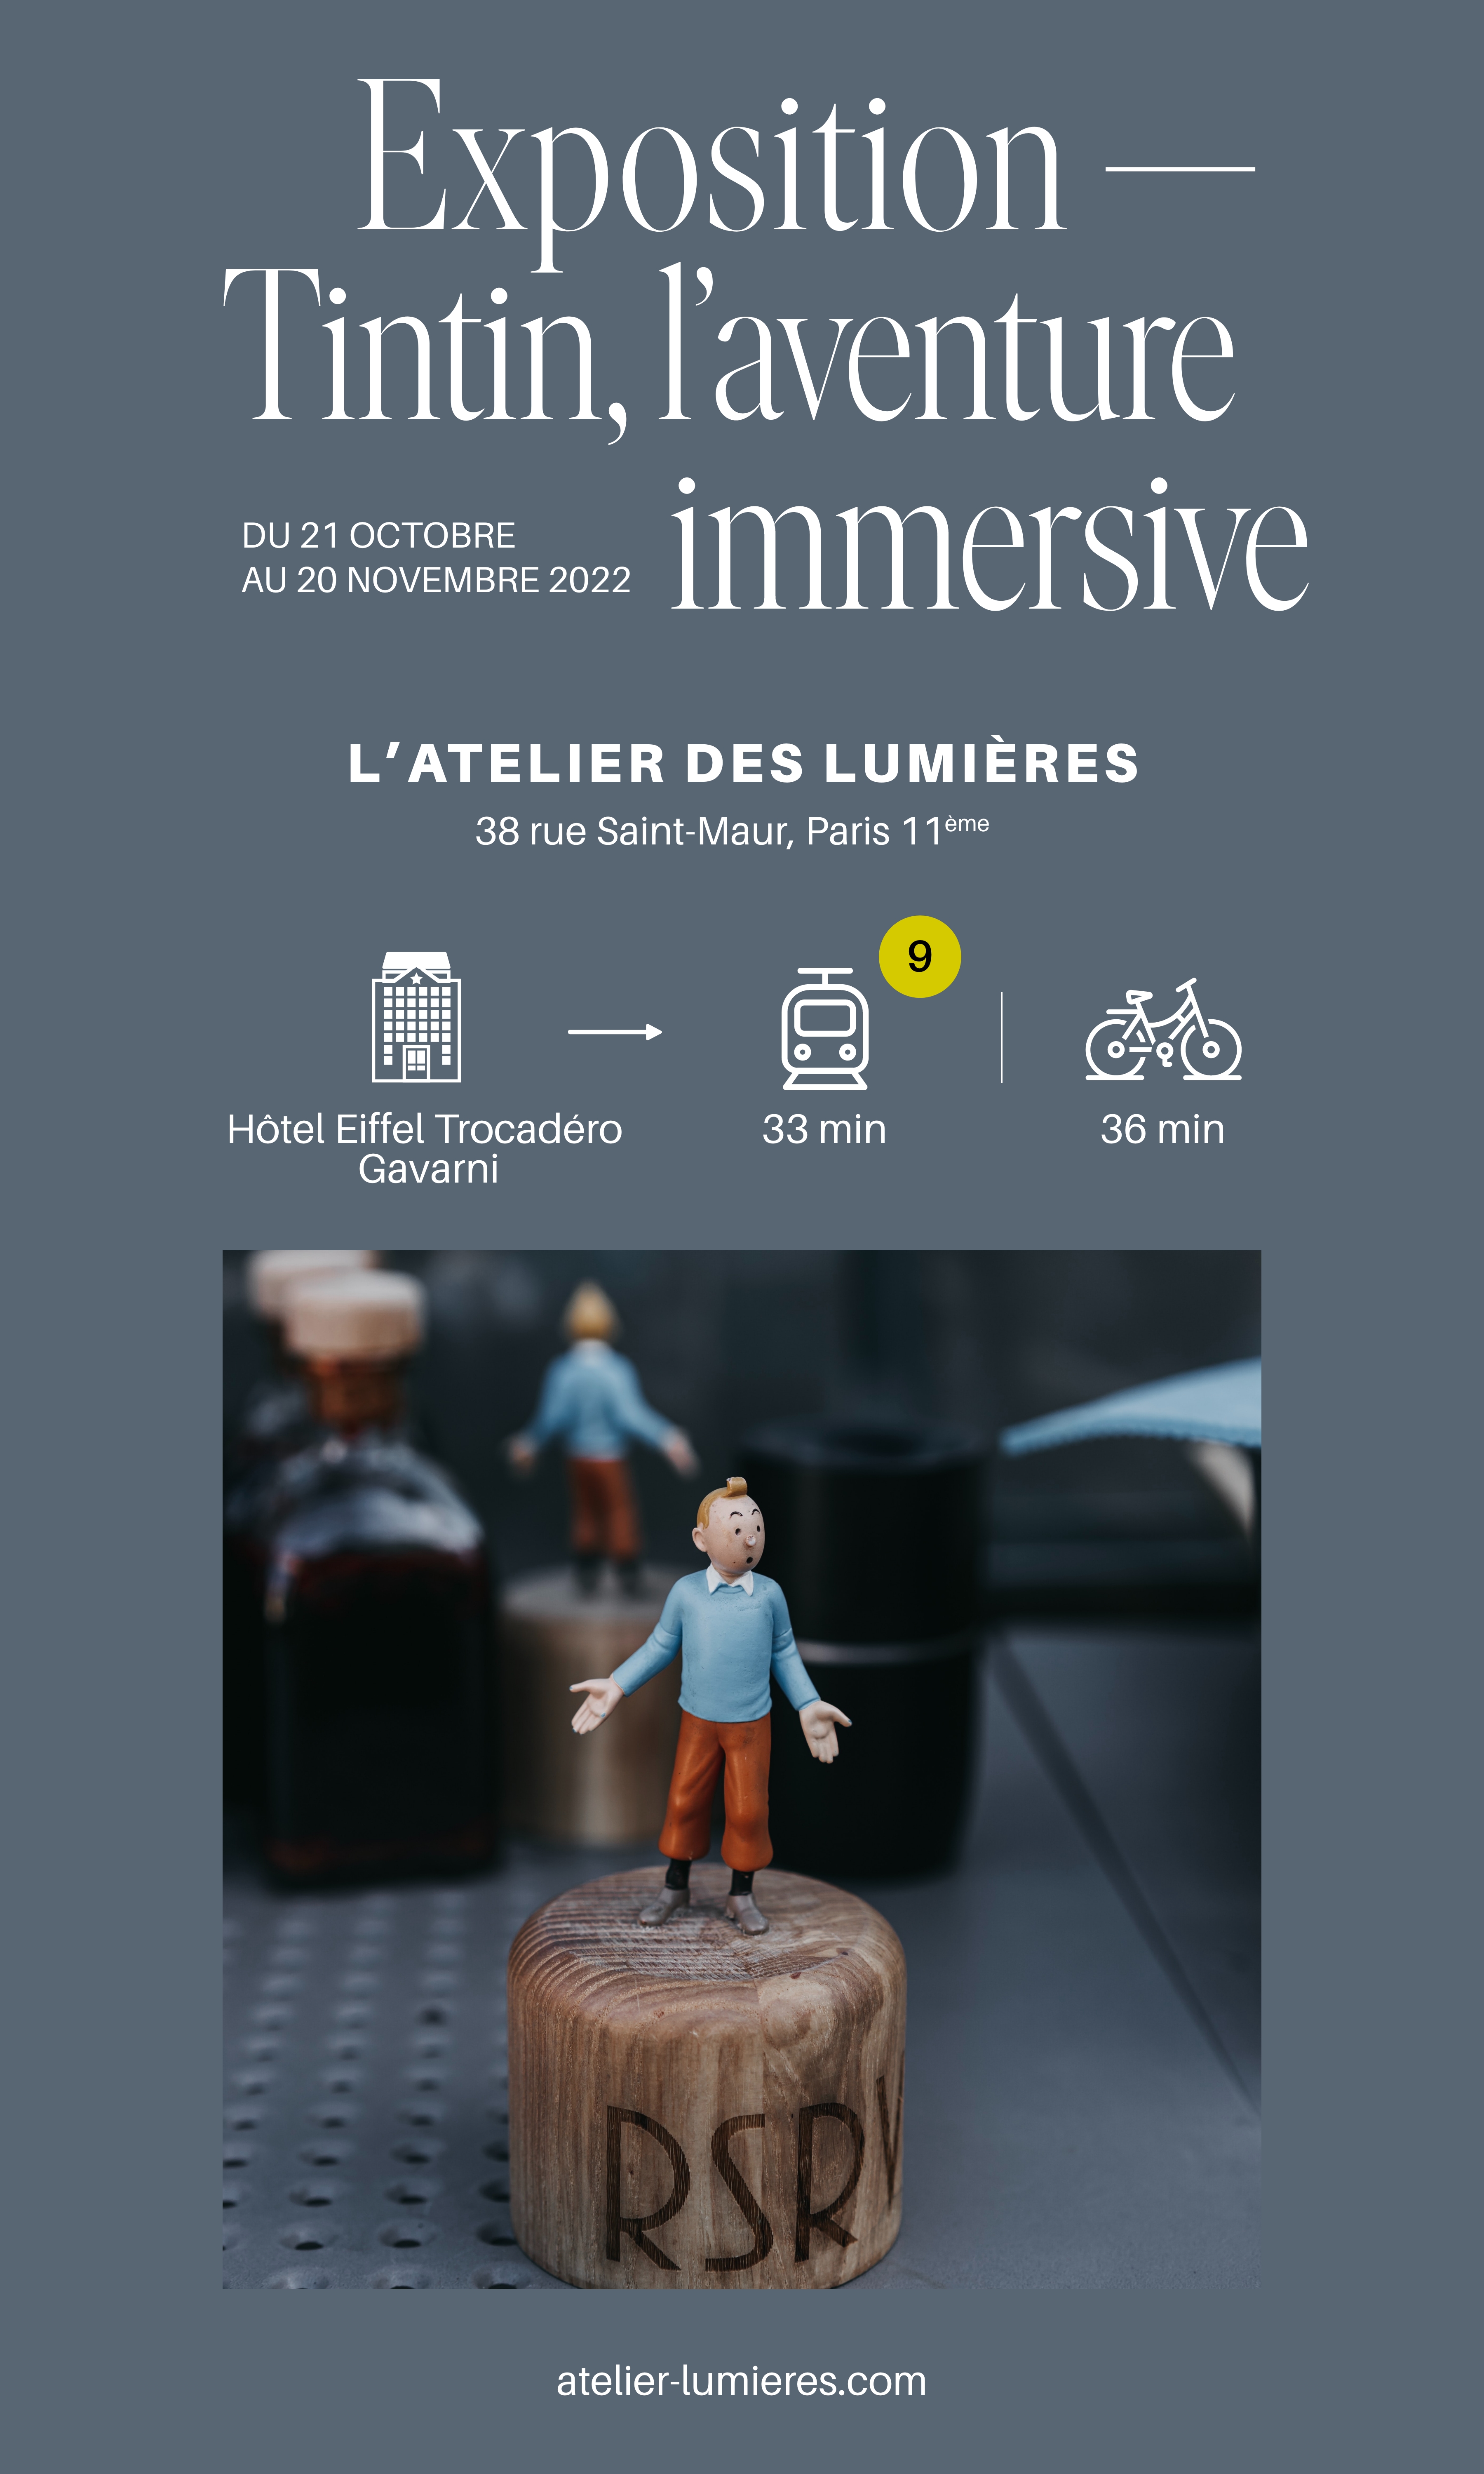 Exhibition « Tintin, the immersive adventure »